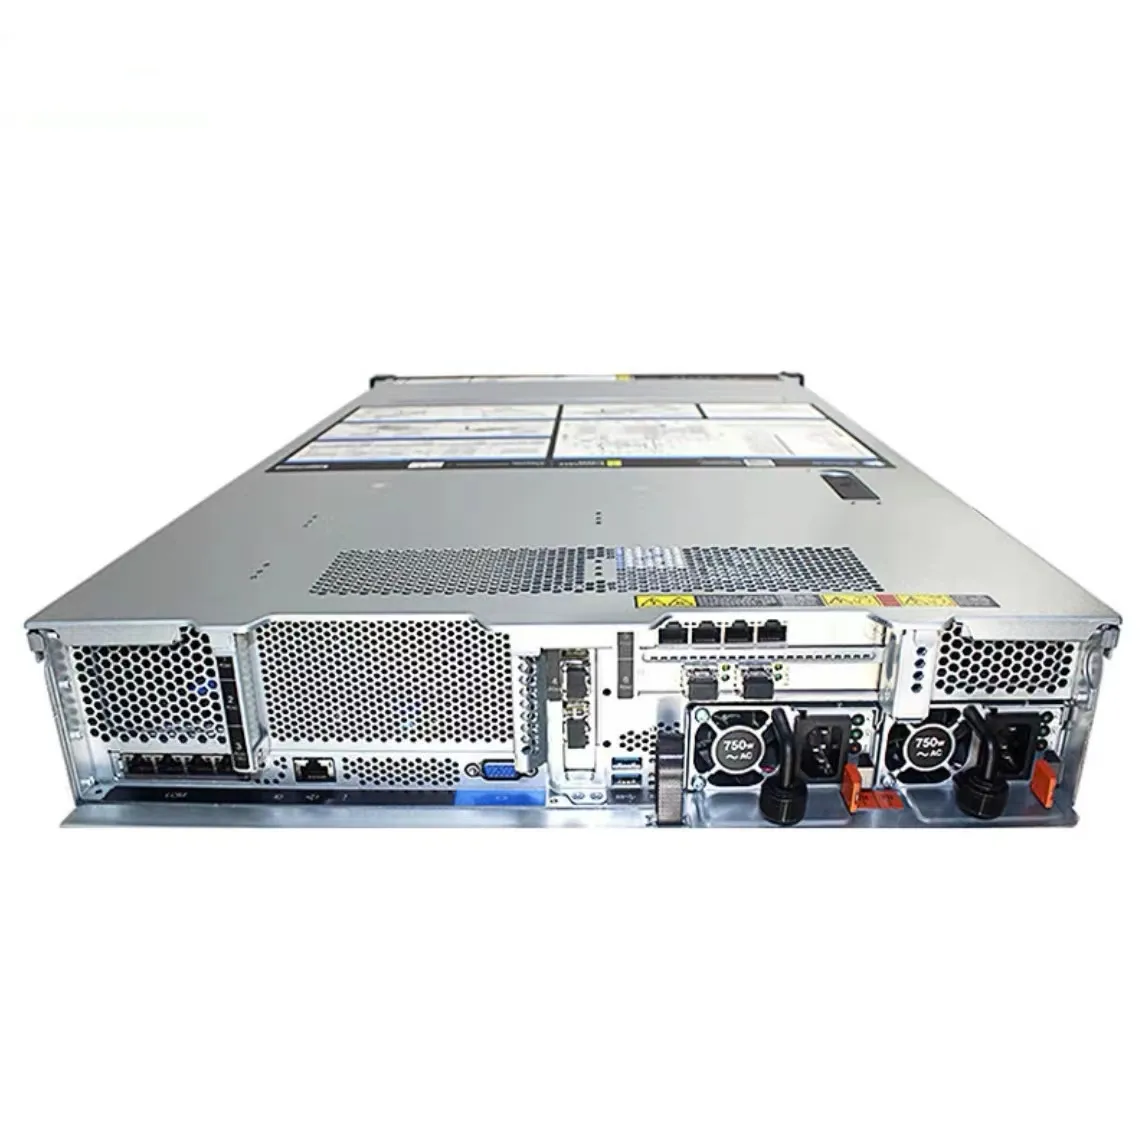 Sr650 server gpu harga beli casing 32 core Rack 2u SR650 Lenovo Thinksystem Server